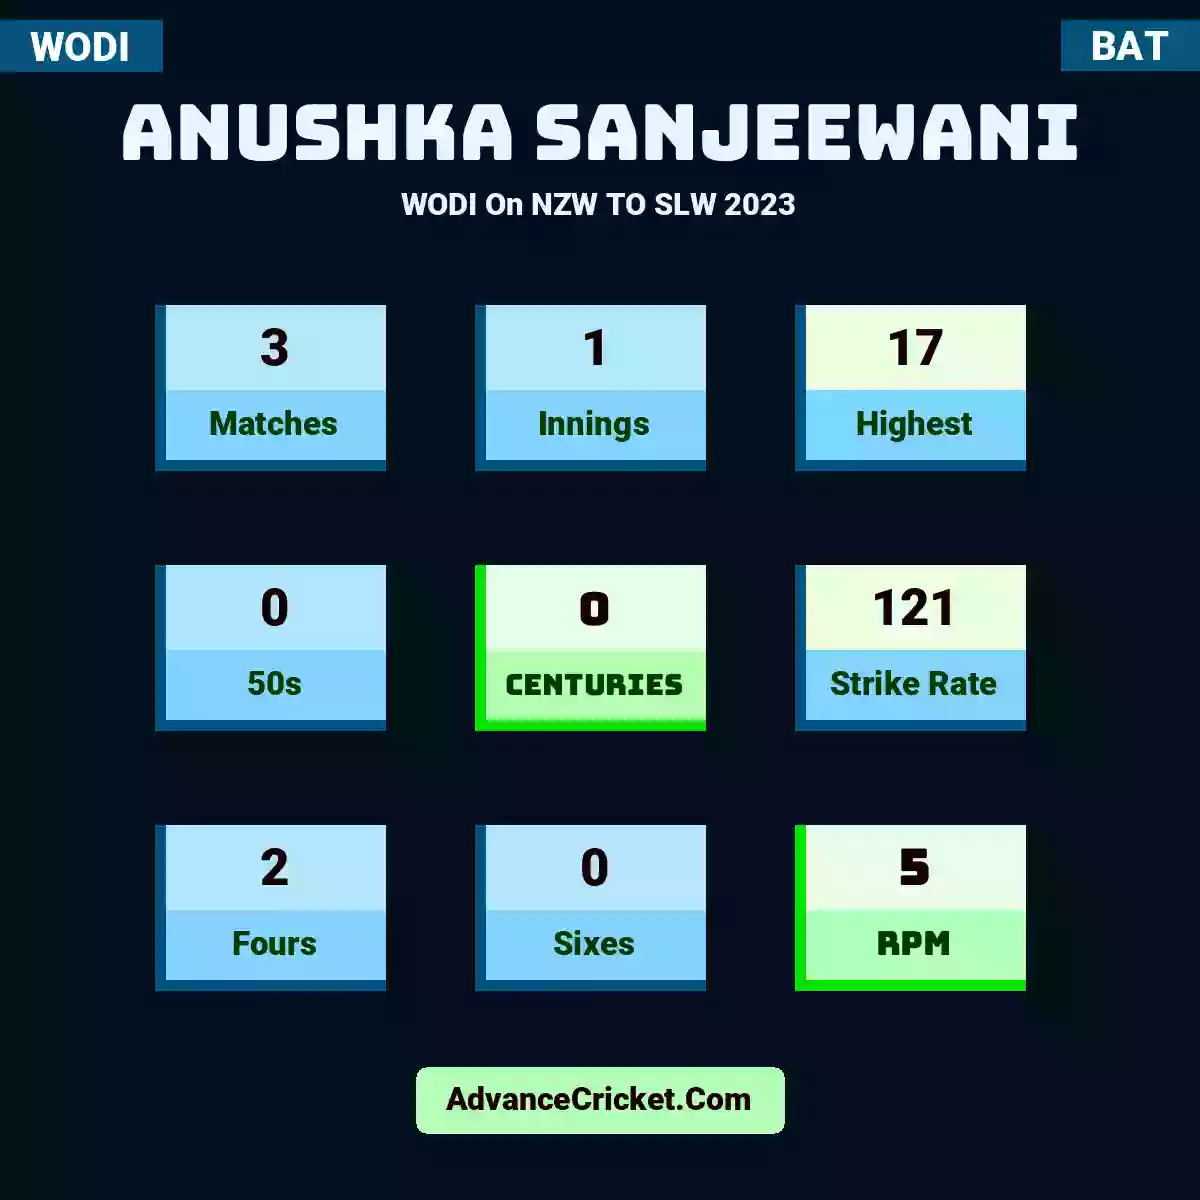 Anushka Sanjeewani WODI  On NZW TO SLW 2023, Anushka Sanjeewani played 3 matches, scored 17 runs as highest, 0 half-centuries, and 0 centuries, with a strike rate of 121. A.Sanjeewani hit 2 fours and 0 sixes, with an RPM of 5.